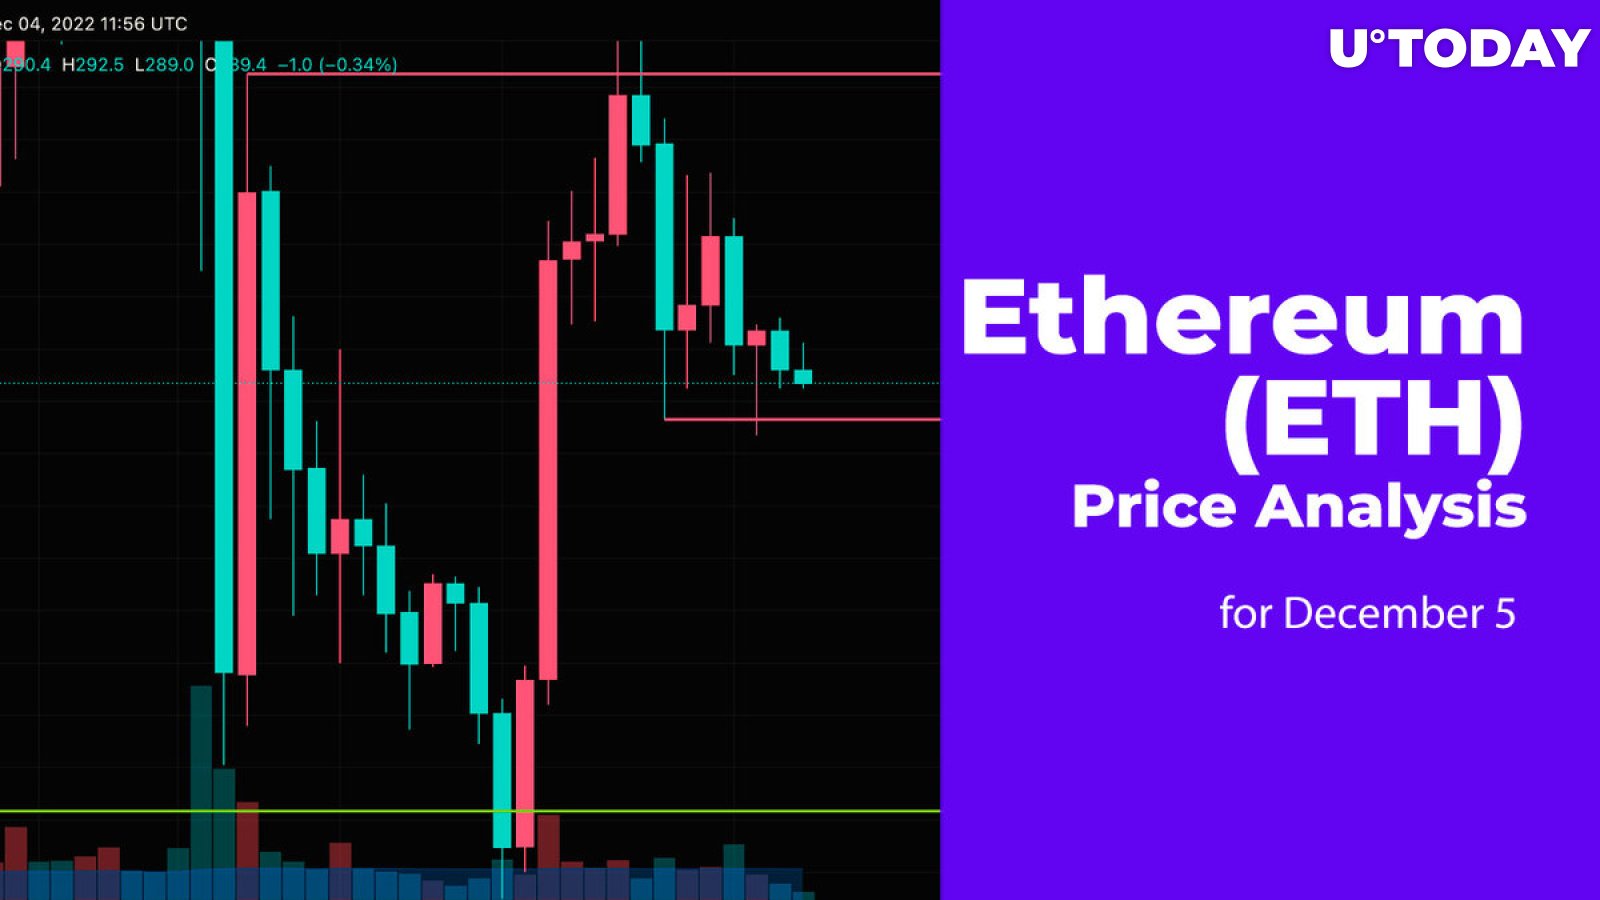 Ethereum (ETH) Price Analysis for December 5